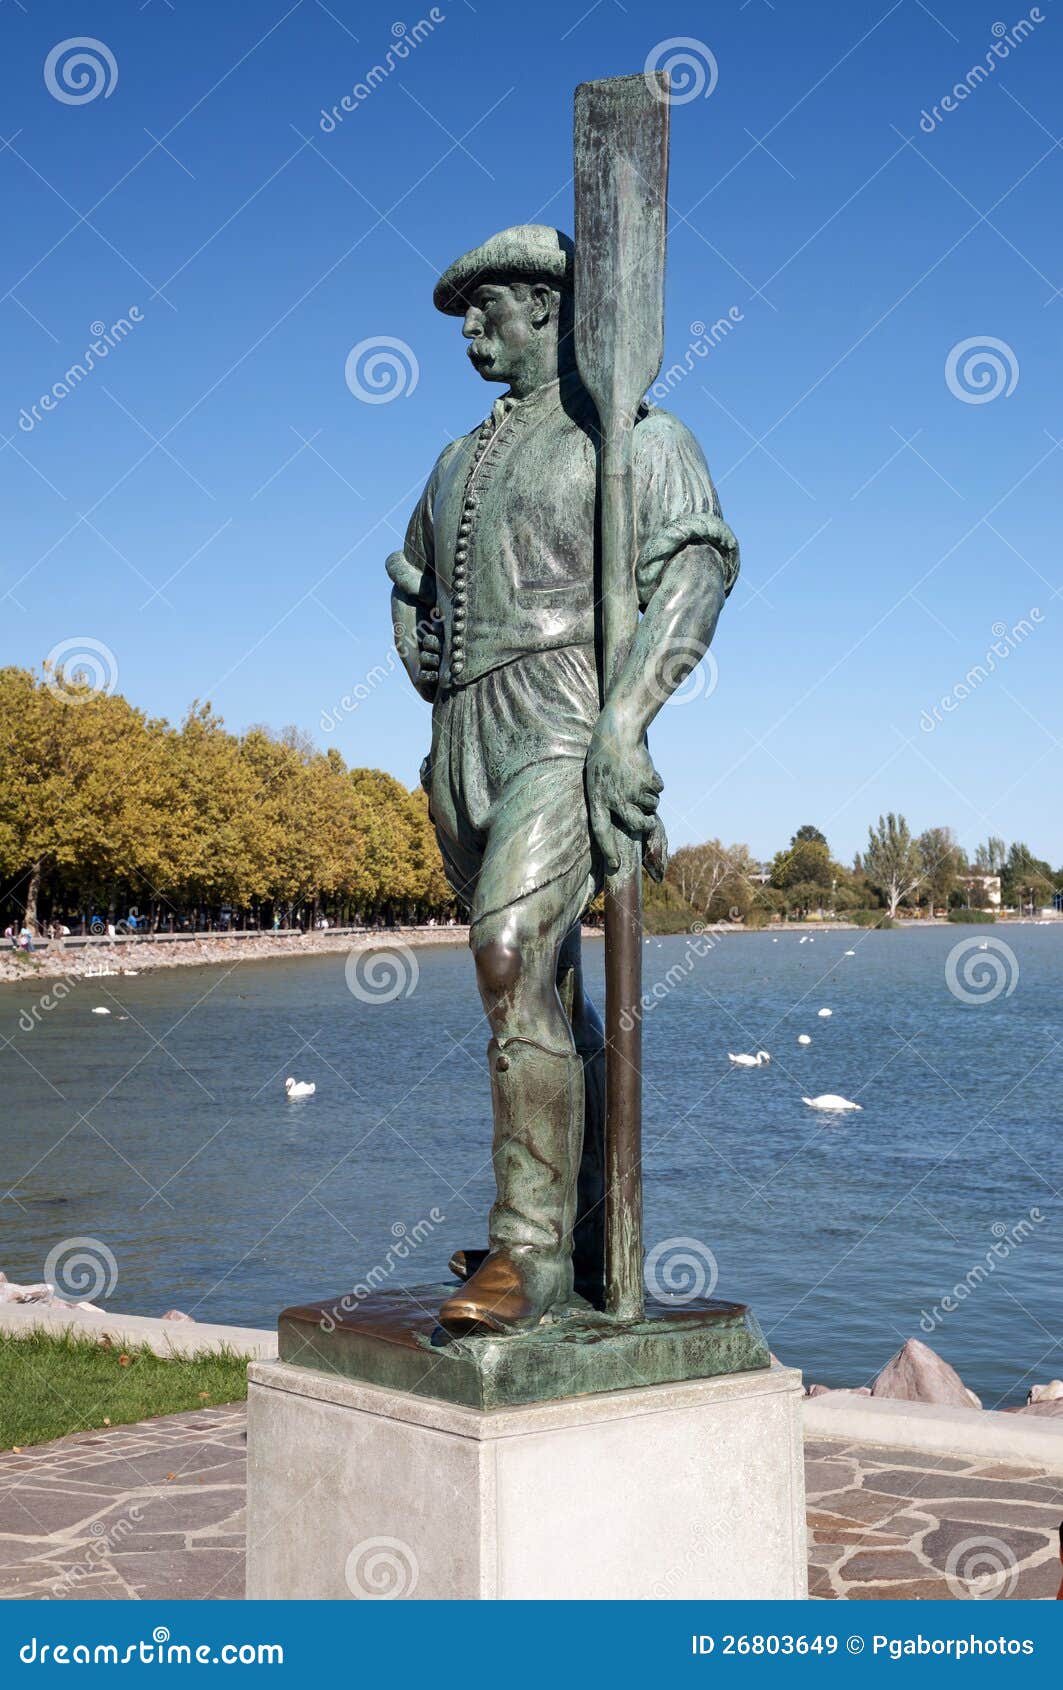 boatman sculpture at lake balaton,hungary